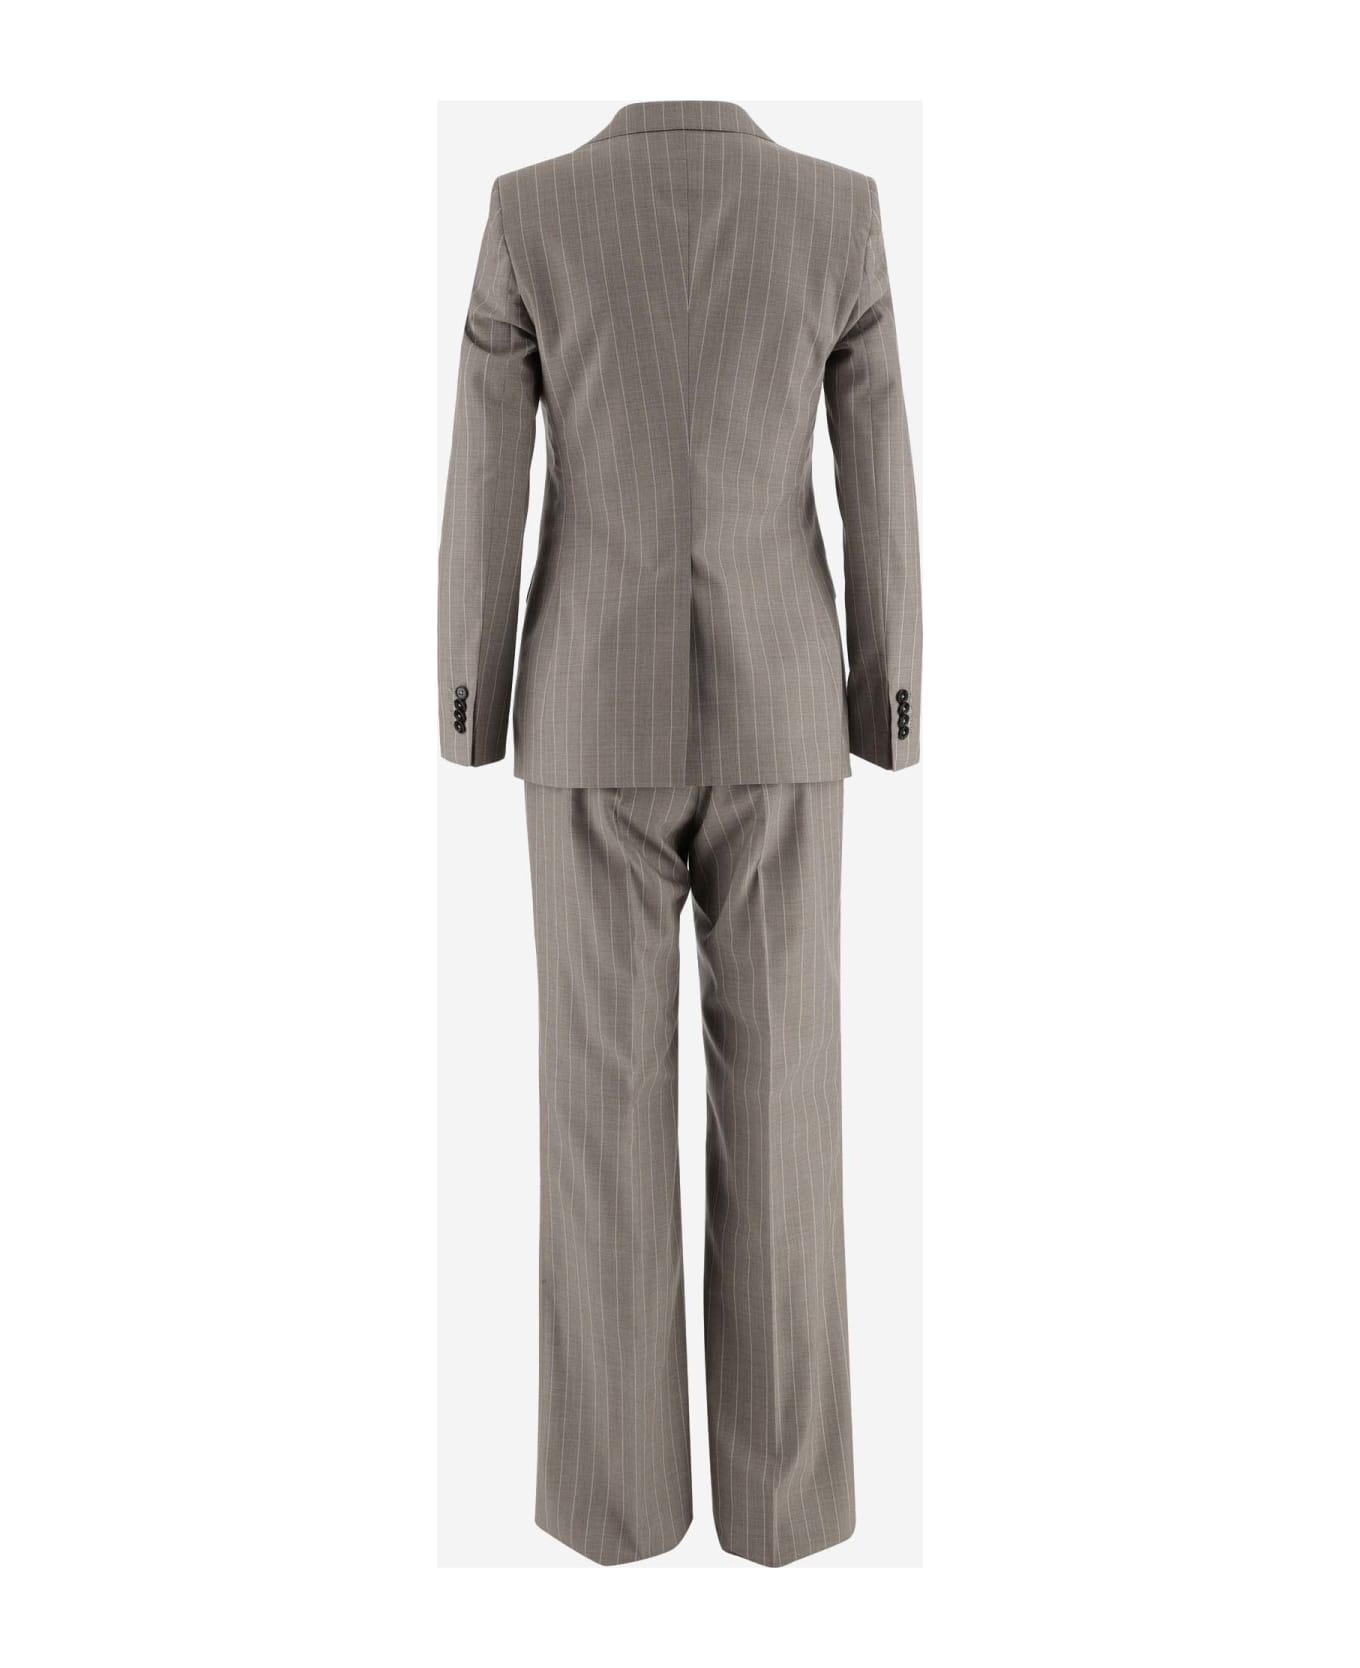 Tagliatore Virgin Wool Pinstripe Suit - Beige